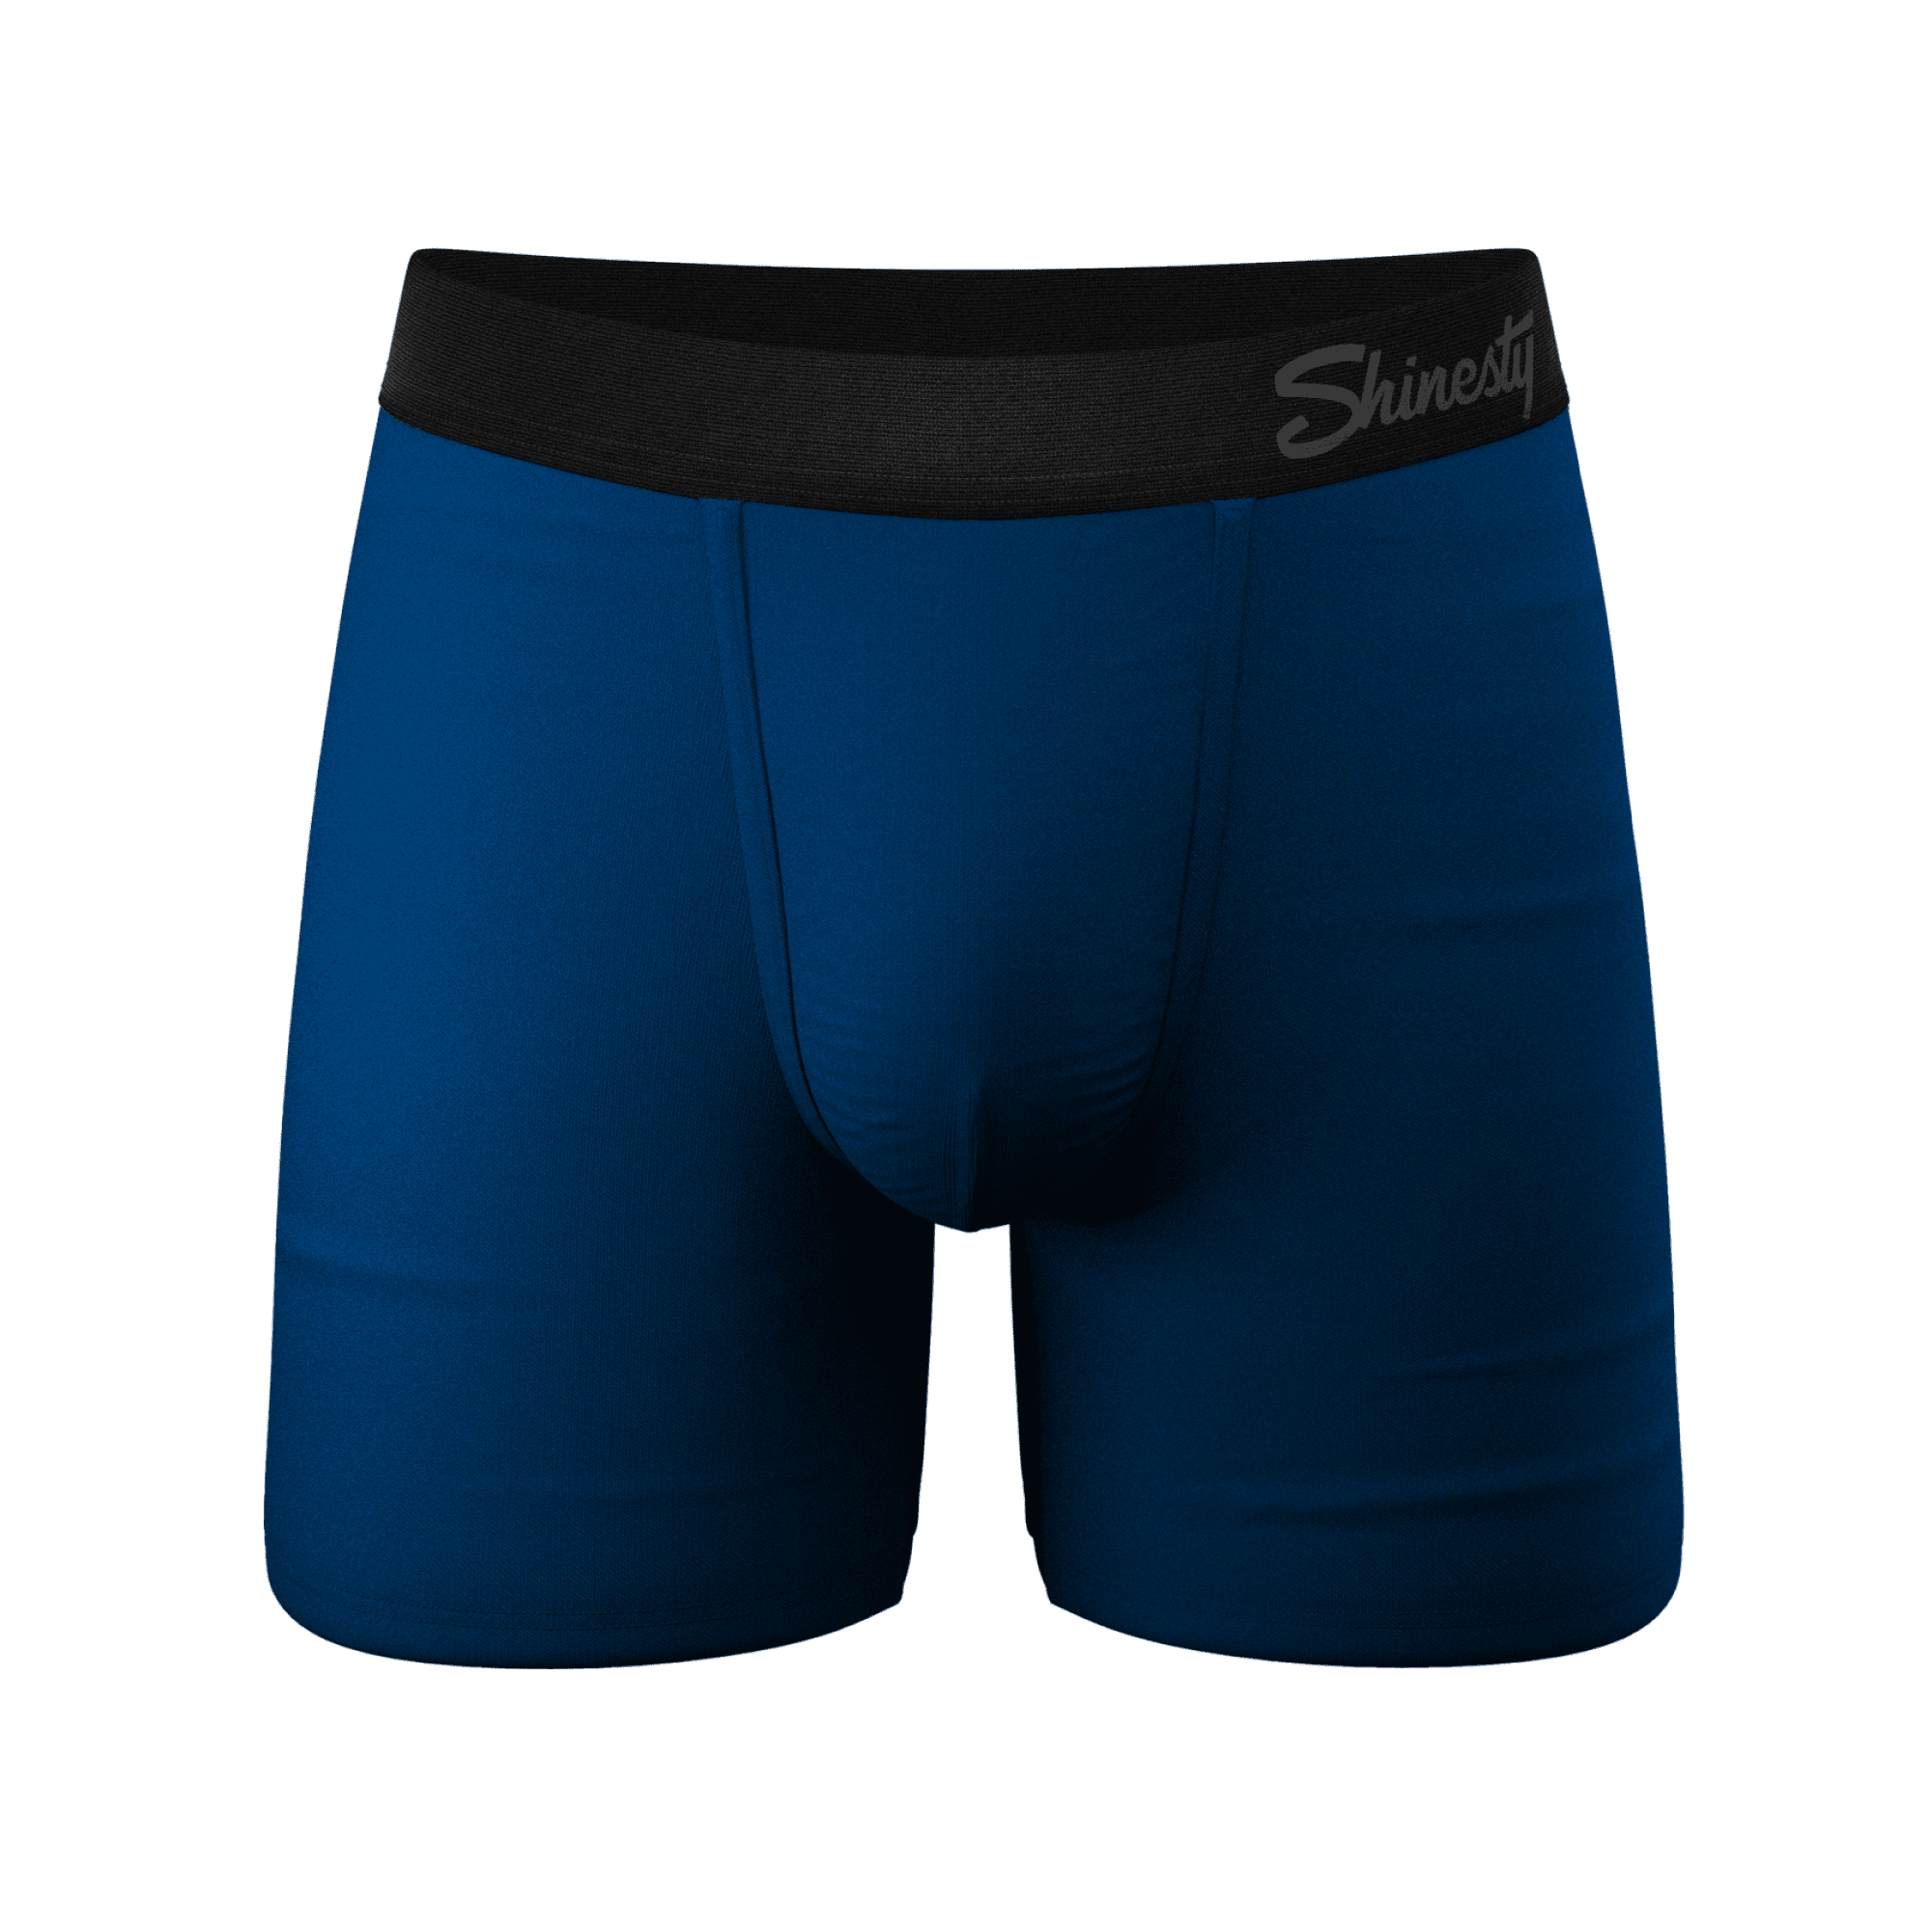 The Big Blue - Shinesty Dark Blue Ball Hammock Pouch Underwear Small